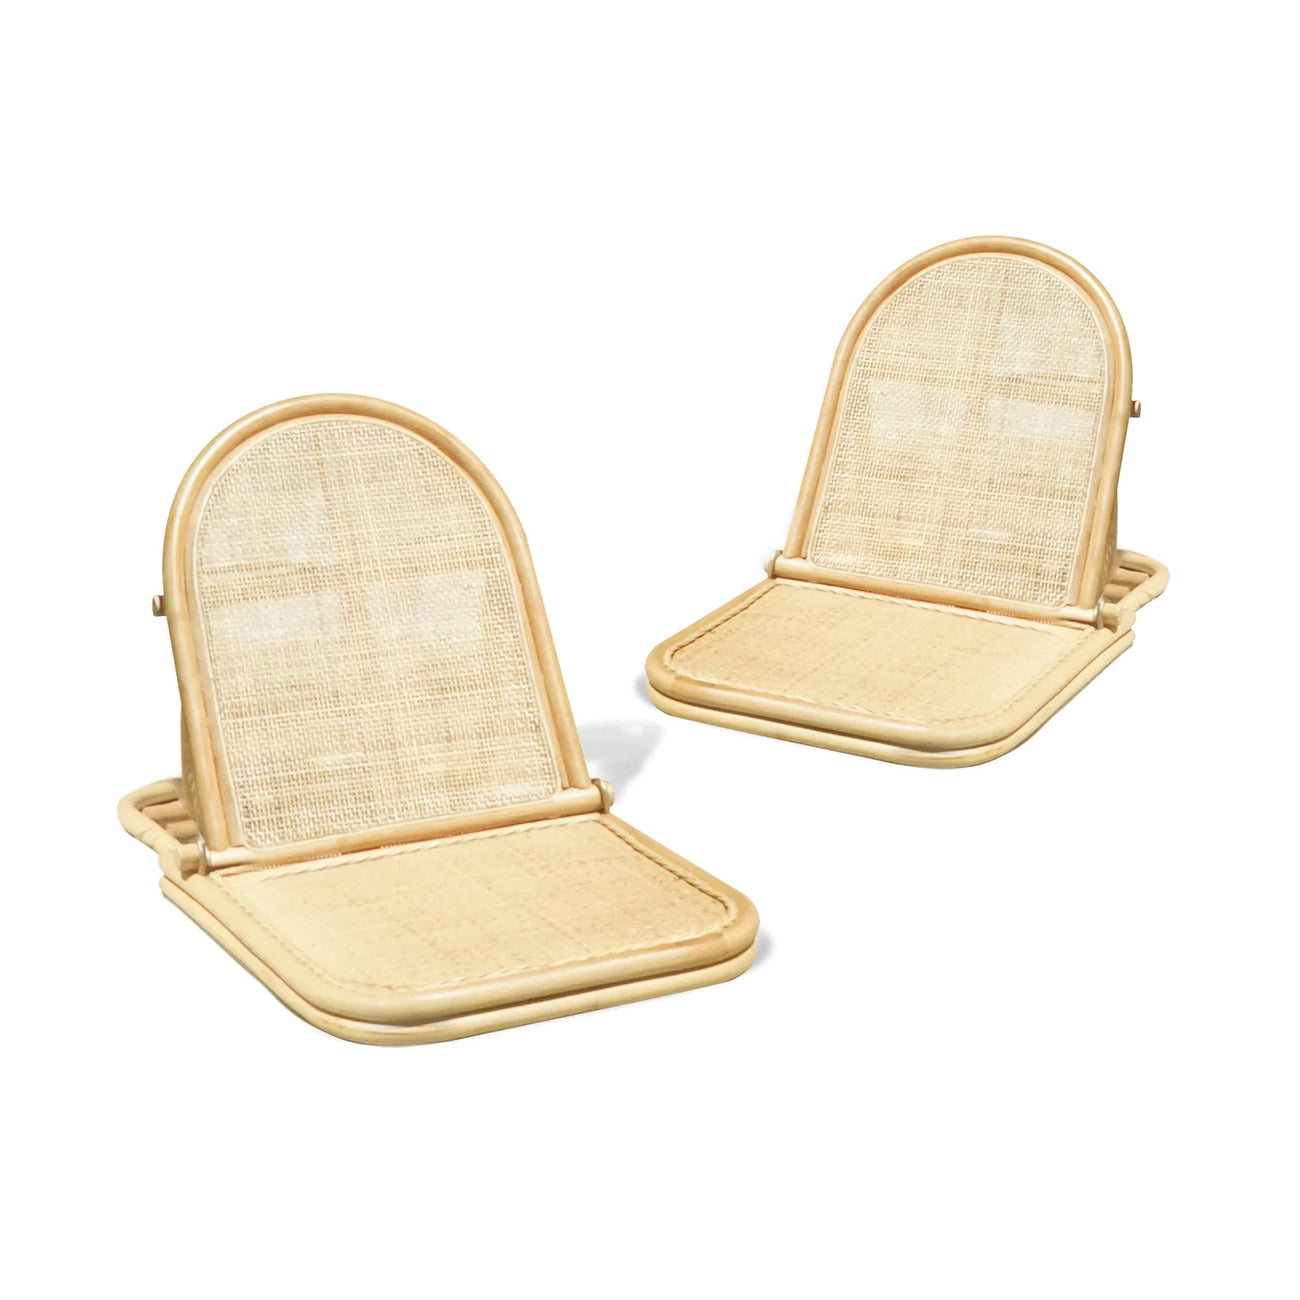 BUNDLE: the ARCHED RATTAN Beach Chair Set